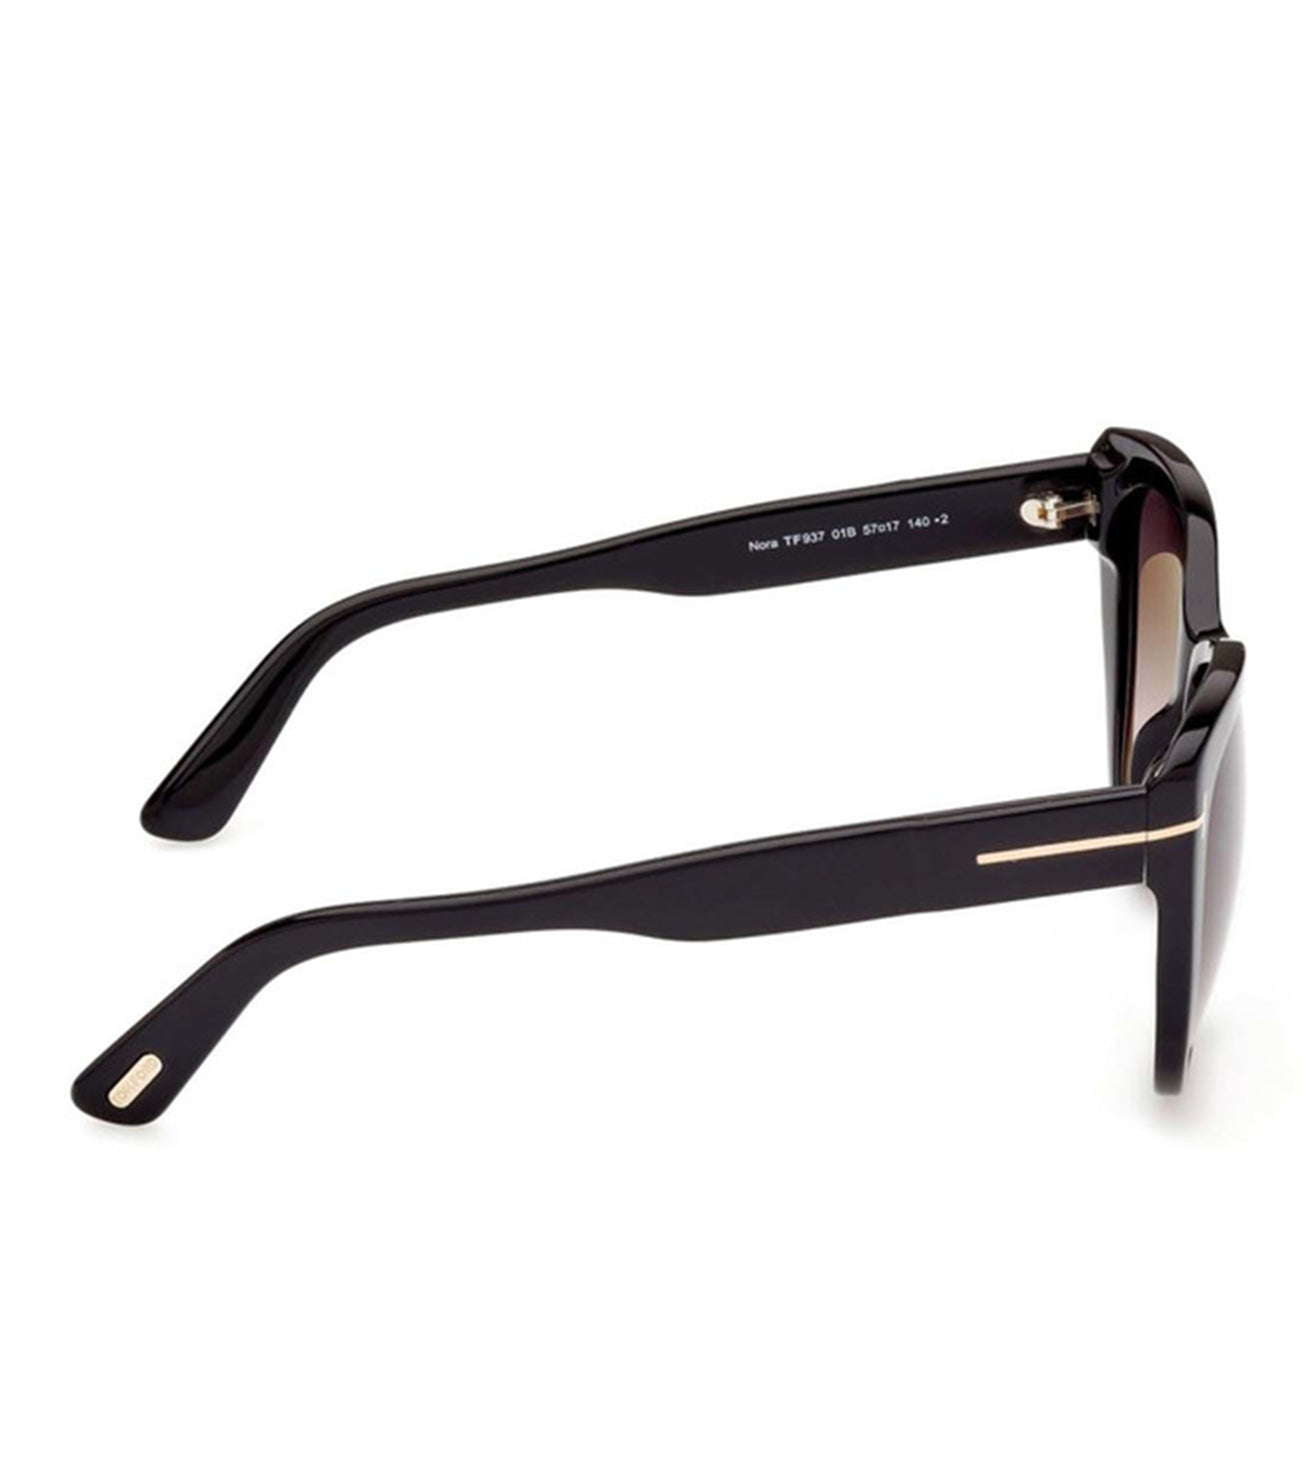 Tom Ford Women's Grey Cateye Sunglasses